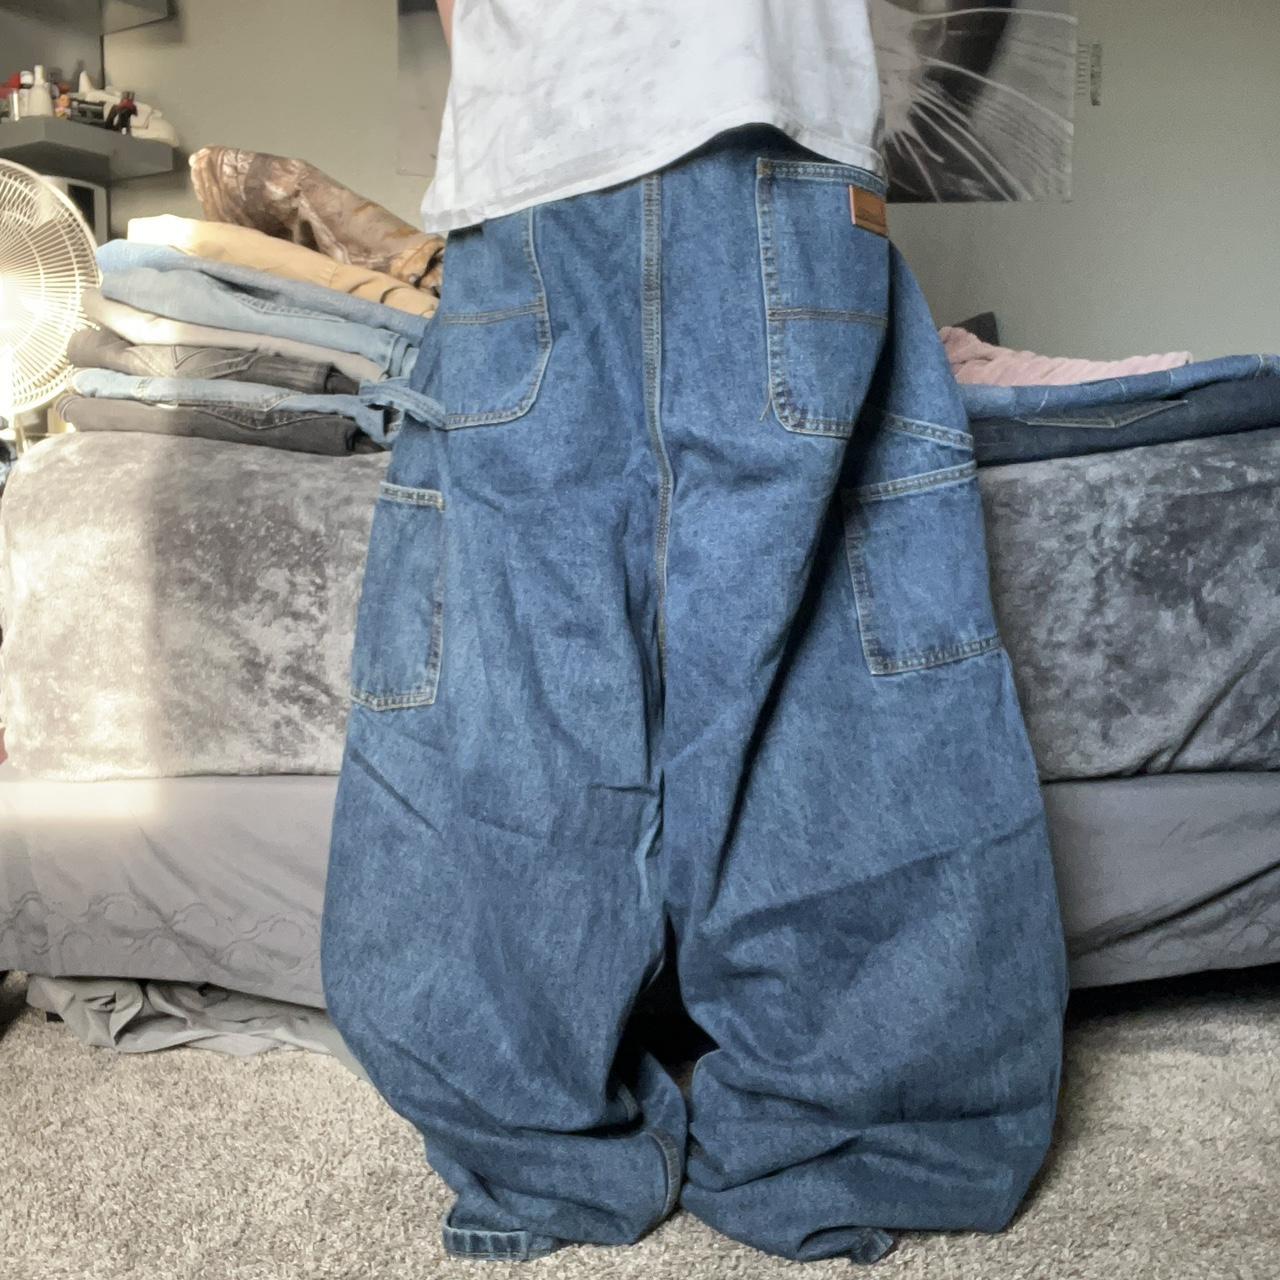 Insanely baggy rk brand carpenter jeans, dm me with... - Depop